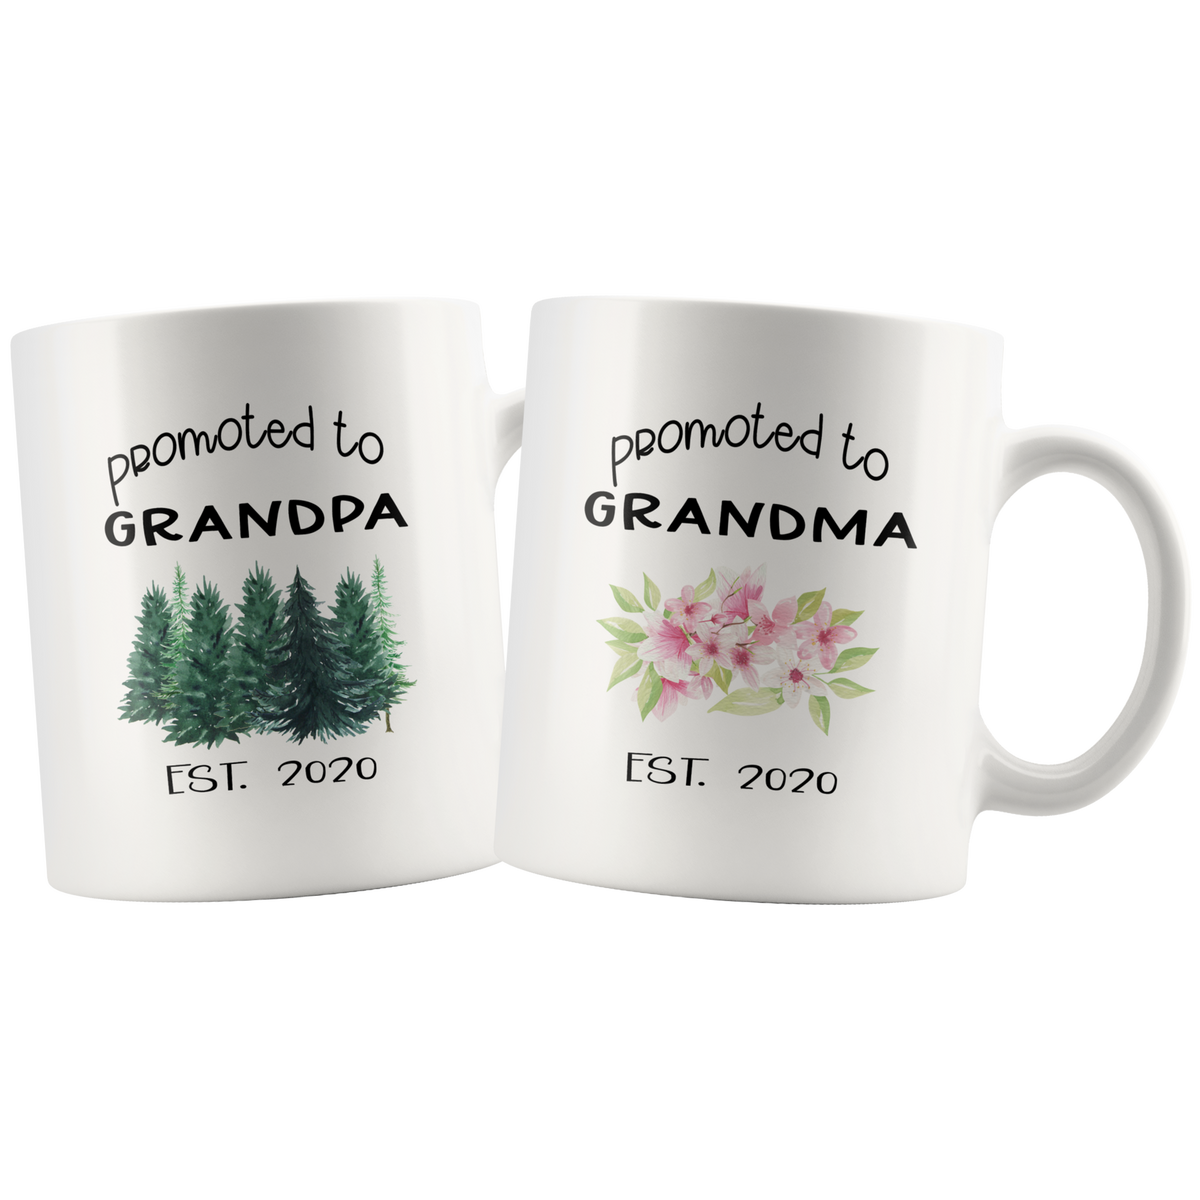 Baby Reveal Pregnancy Reveal Birth Announcement Gift - Promoted To Grandpa Grandma Mug Set